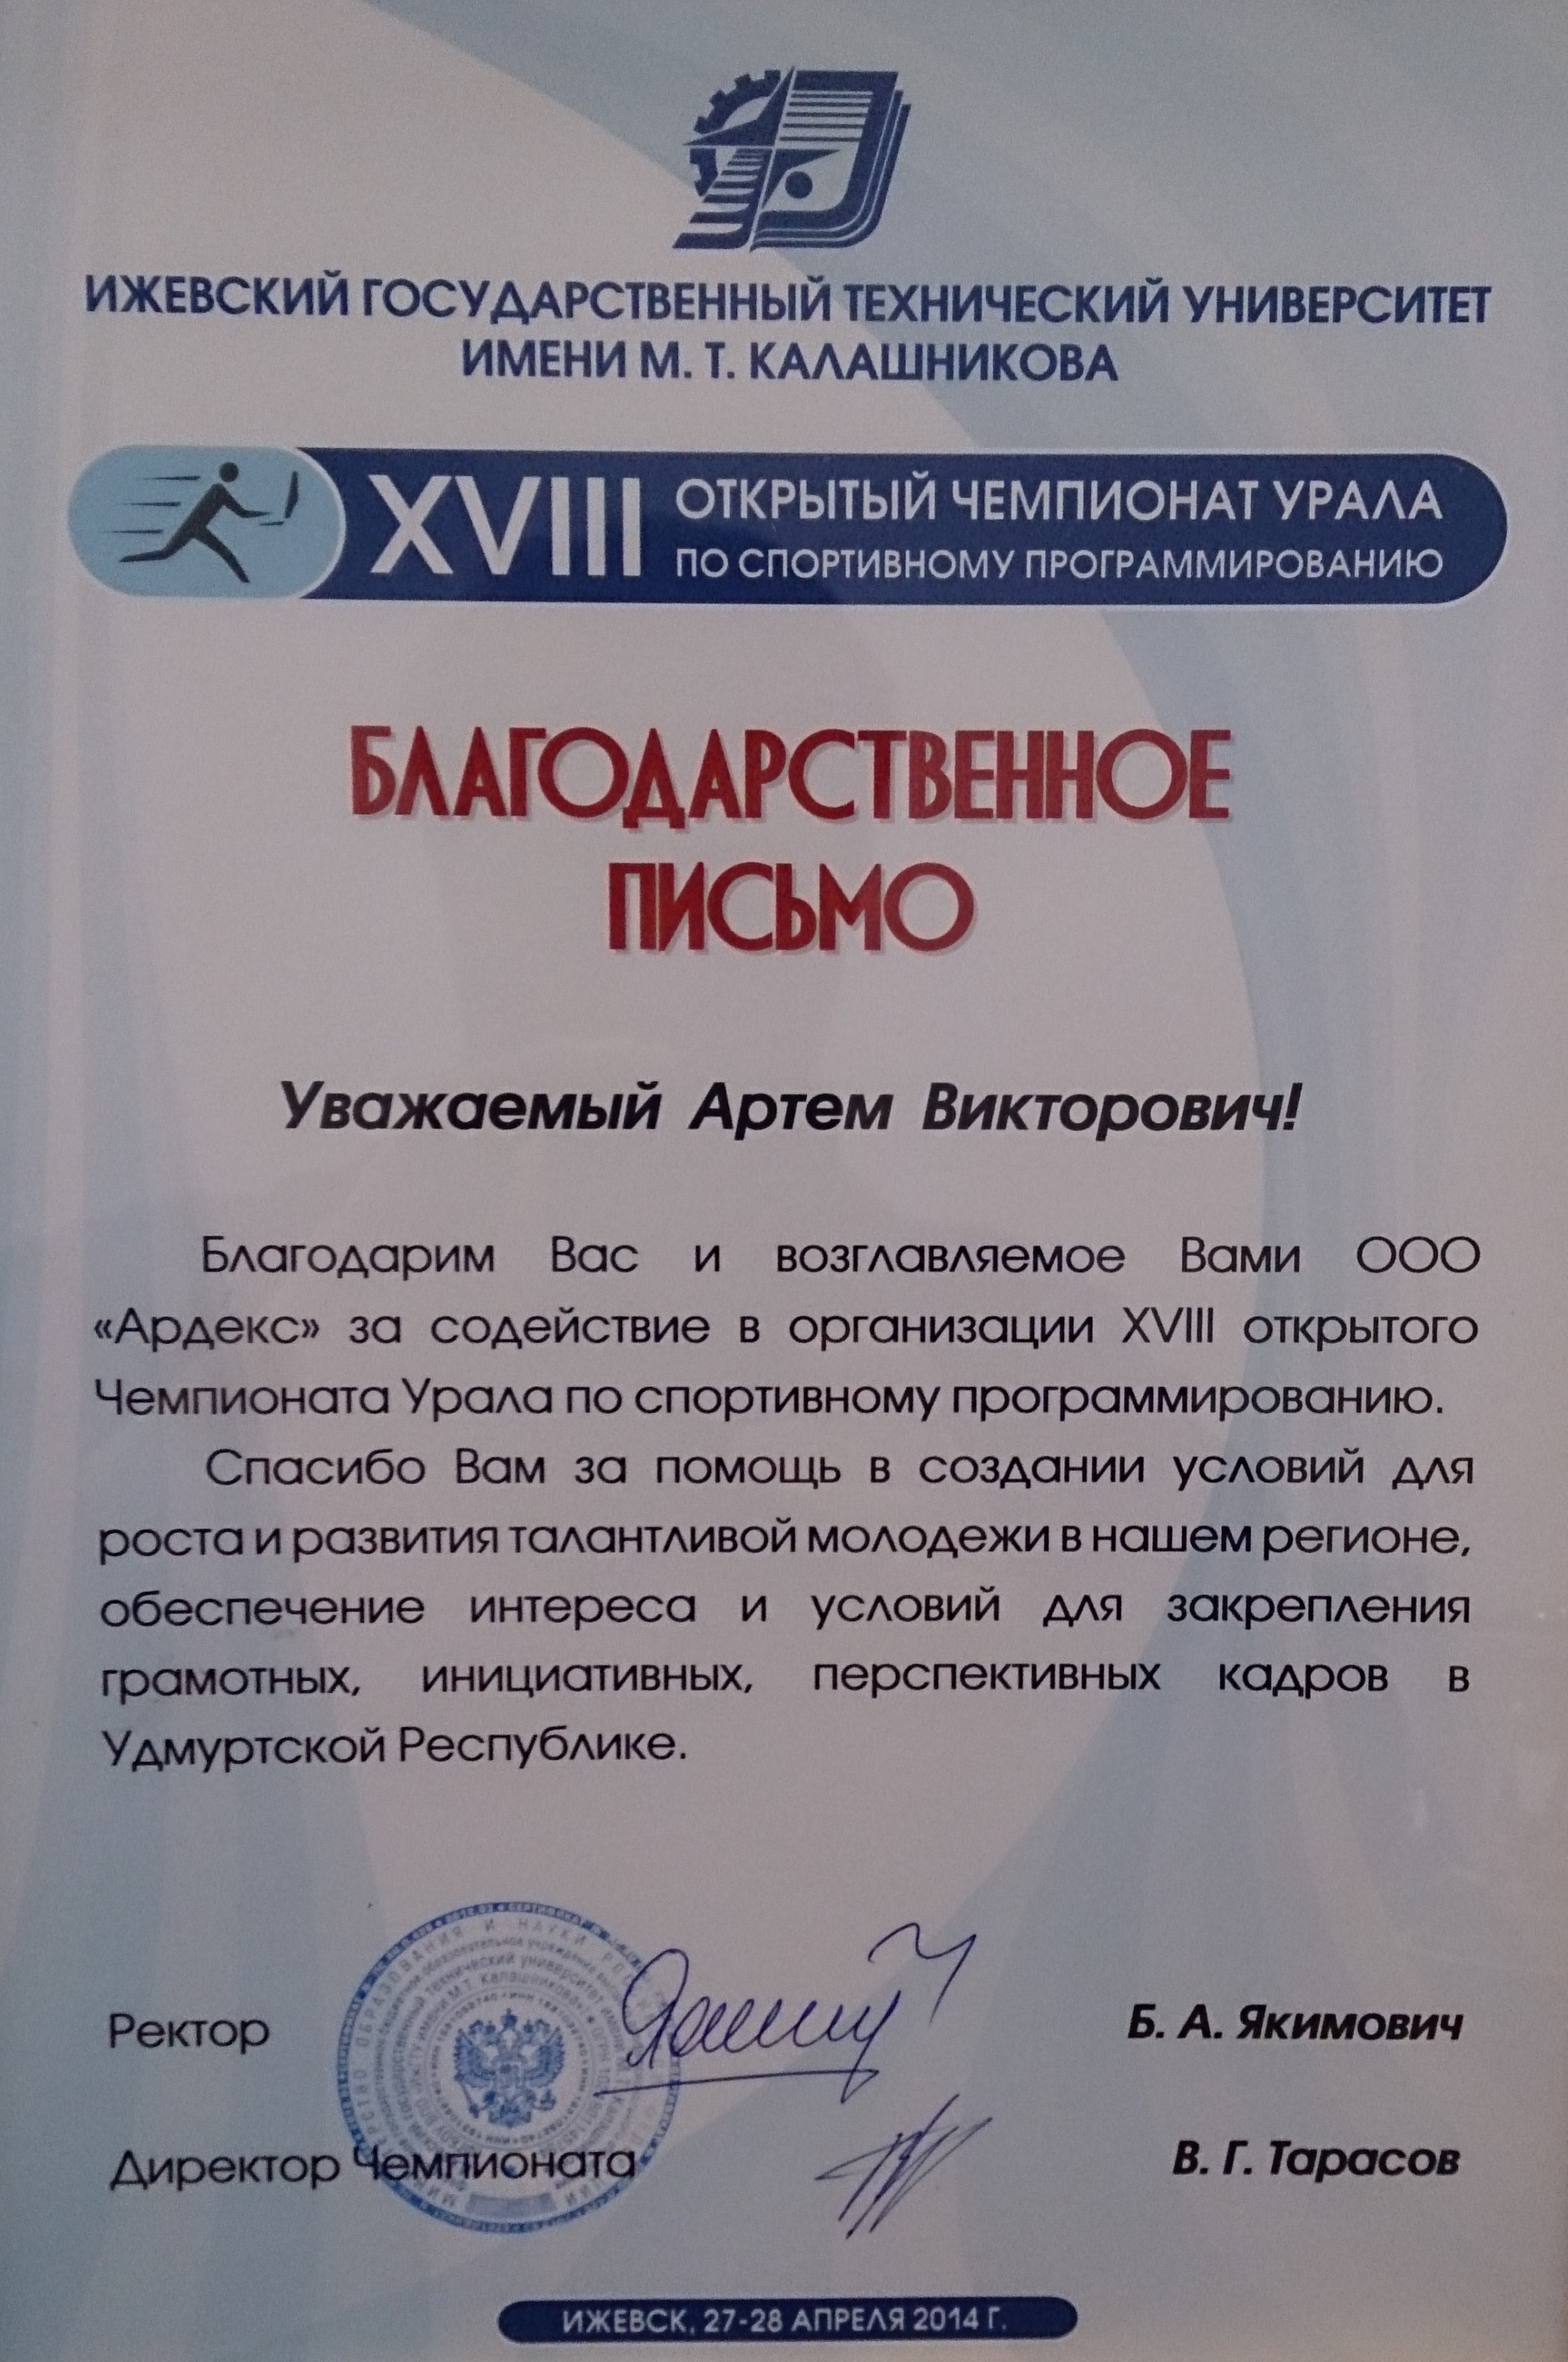 Letter of Appreciation from the Kalashnikov Izhevsk State Technical University